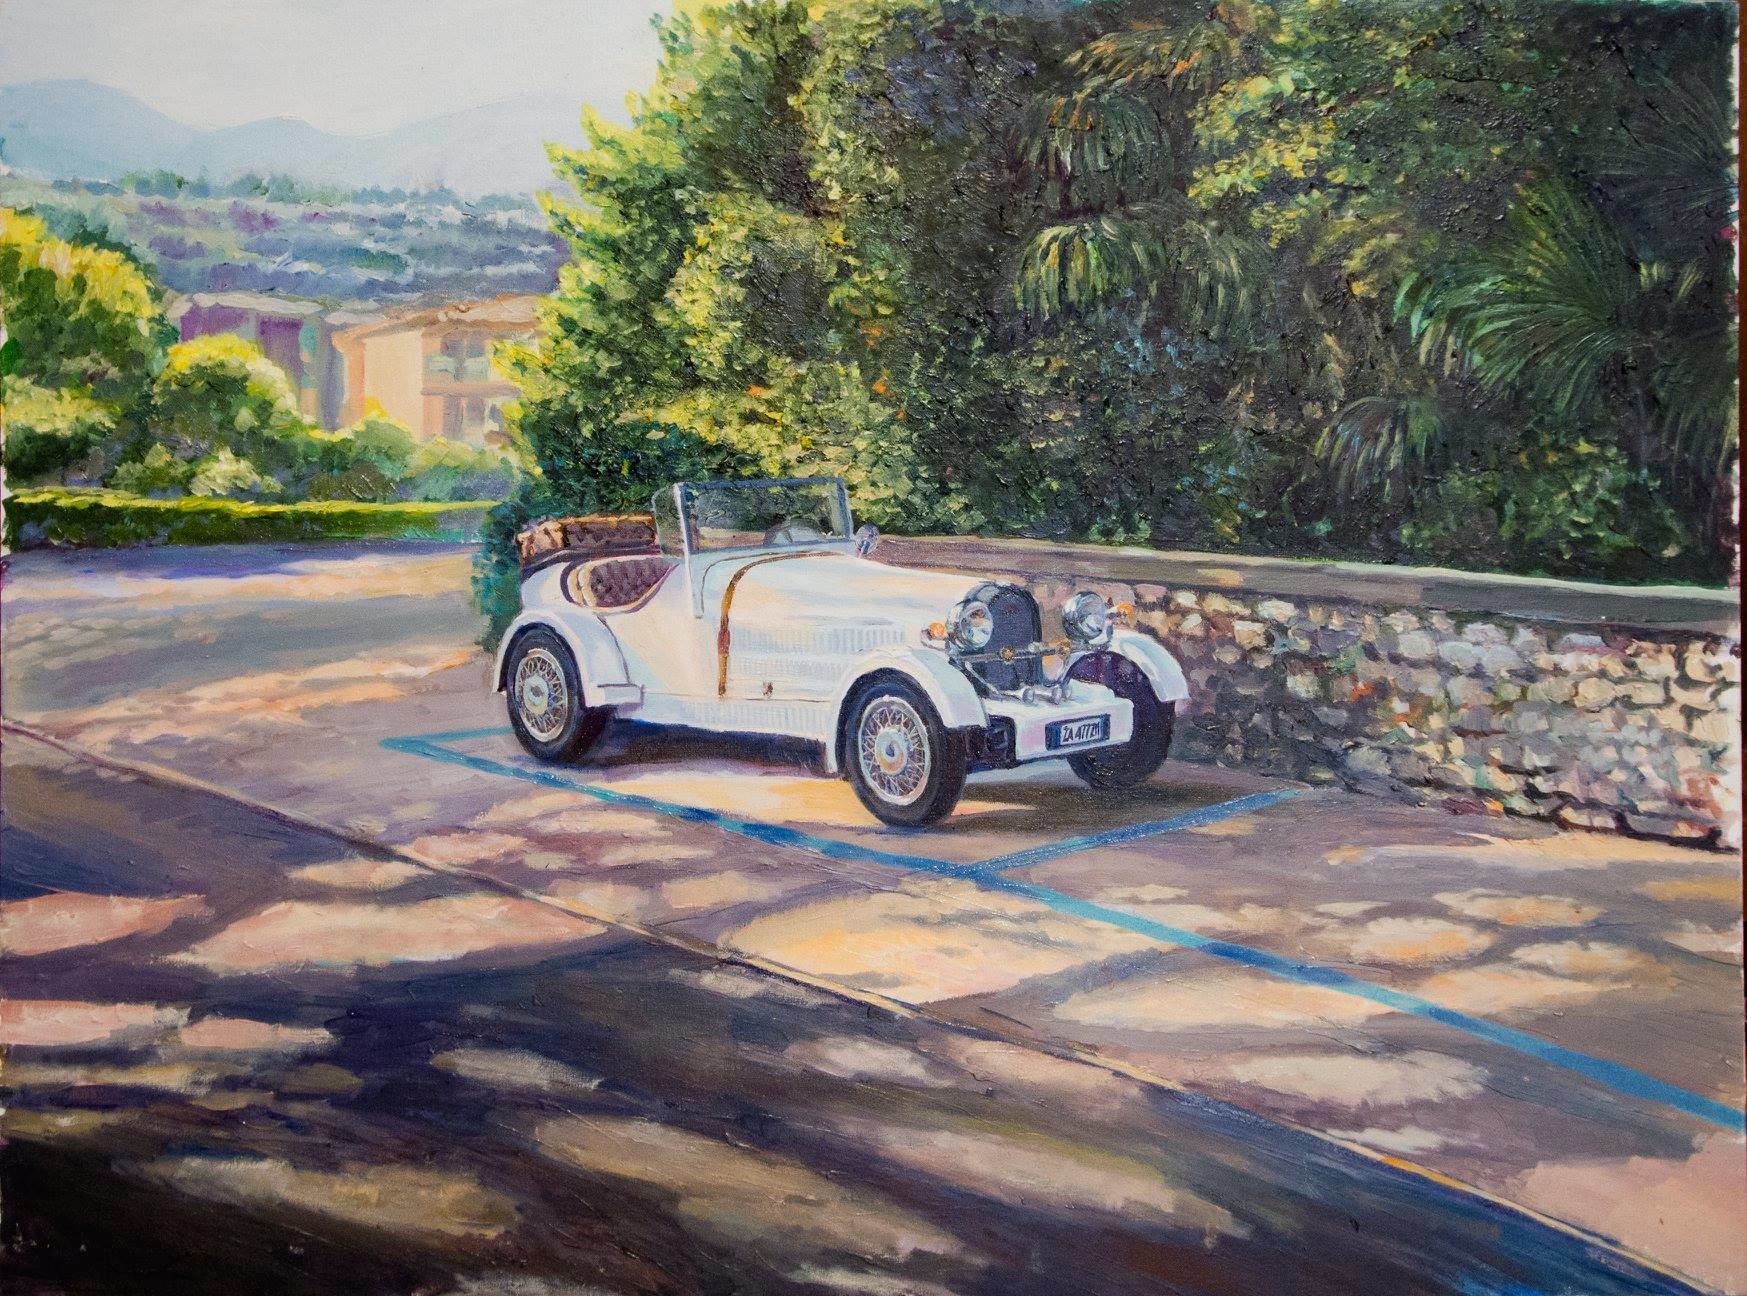 ArtStation - Oil painting of a retro car